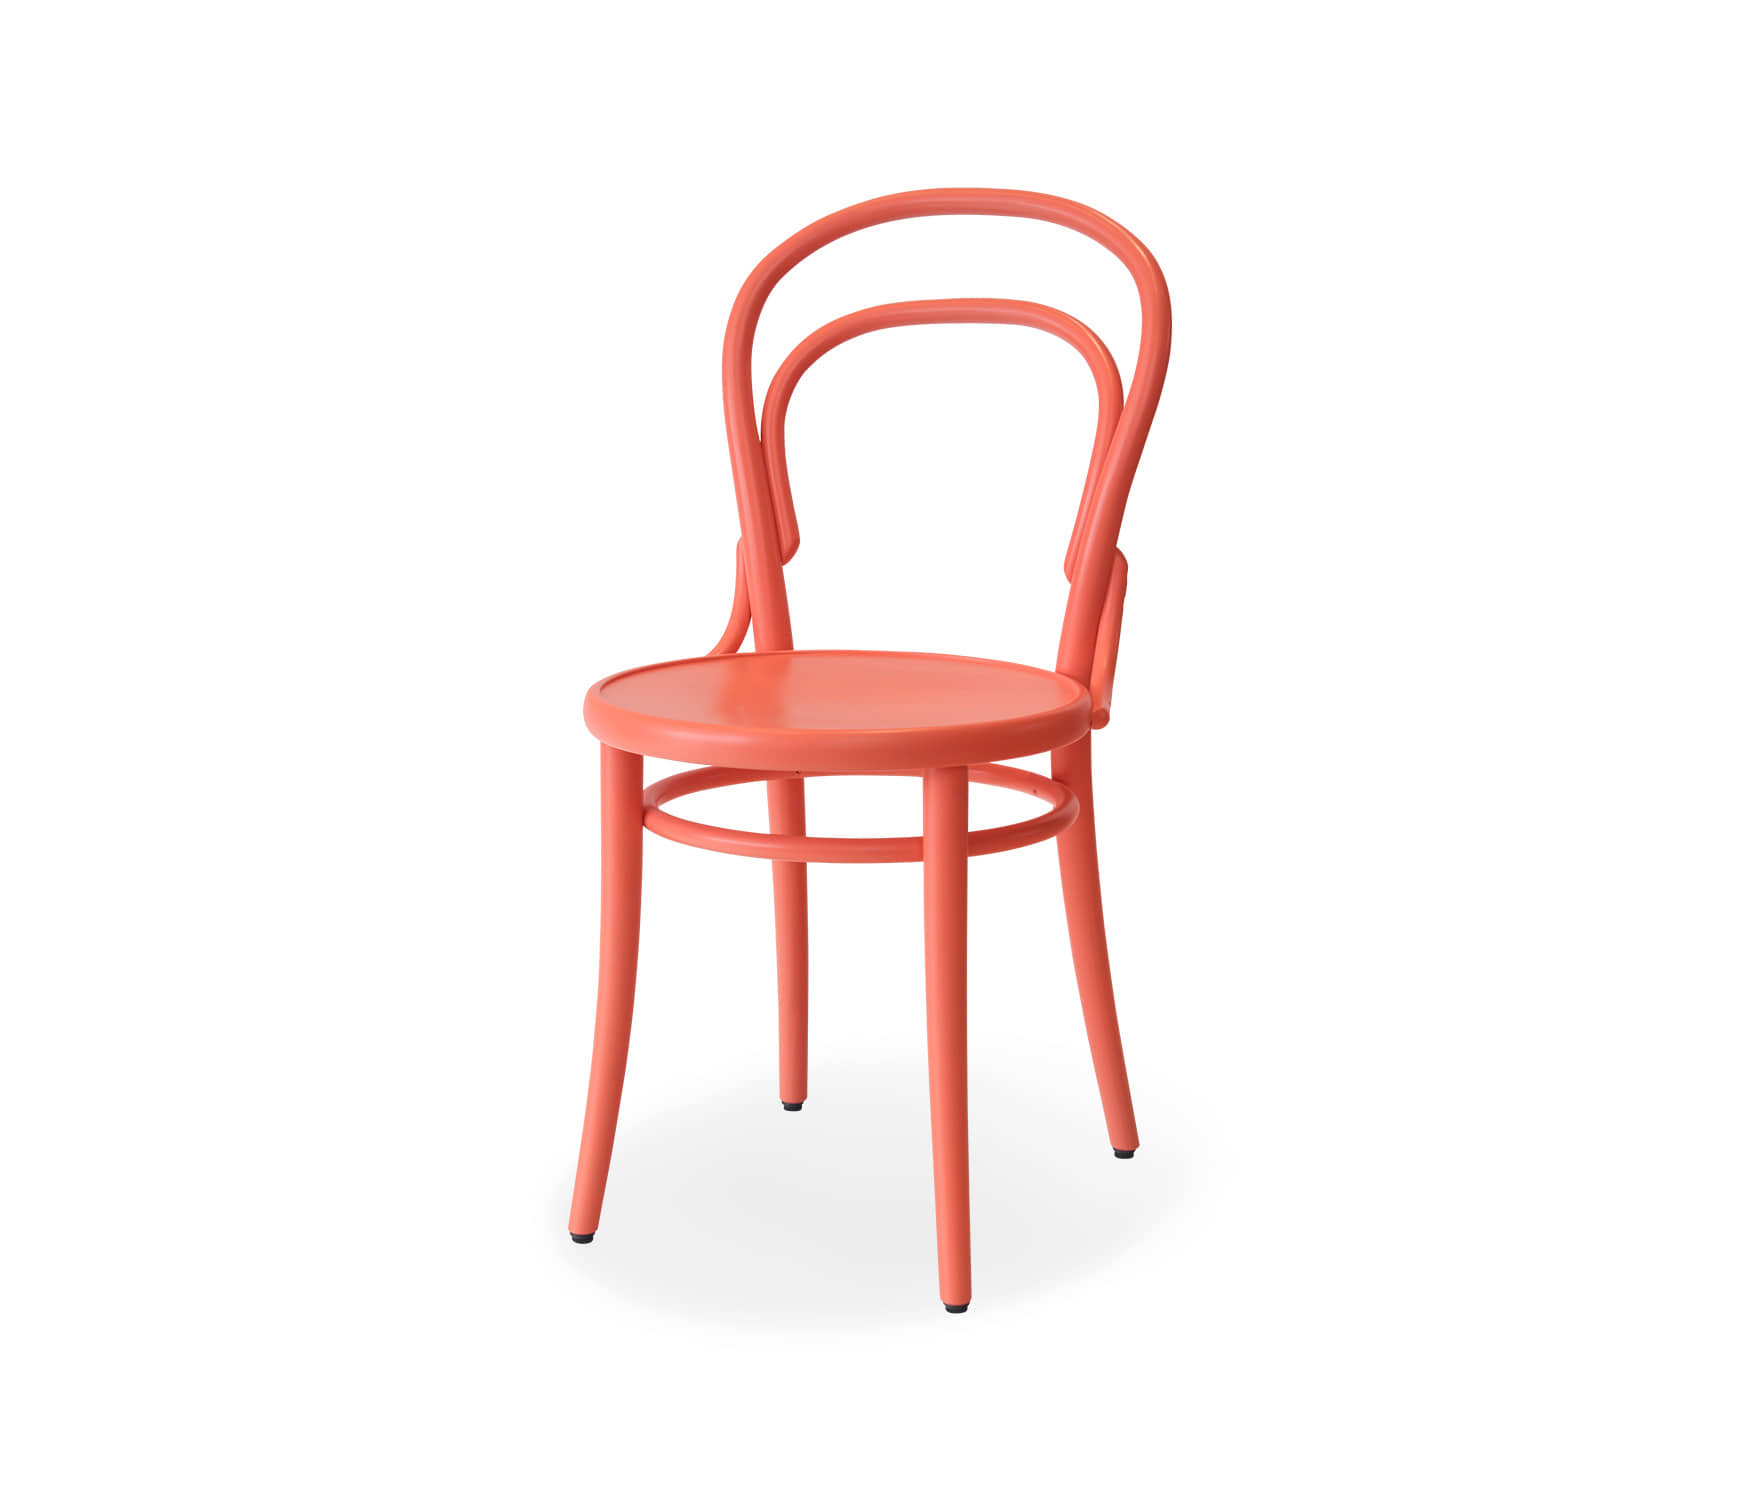 Chair 14 - Salmon Pink